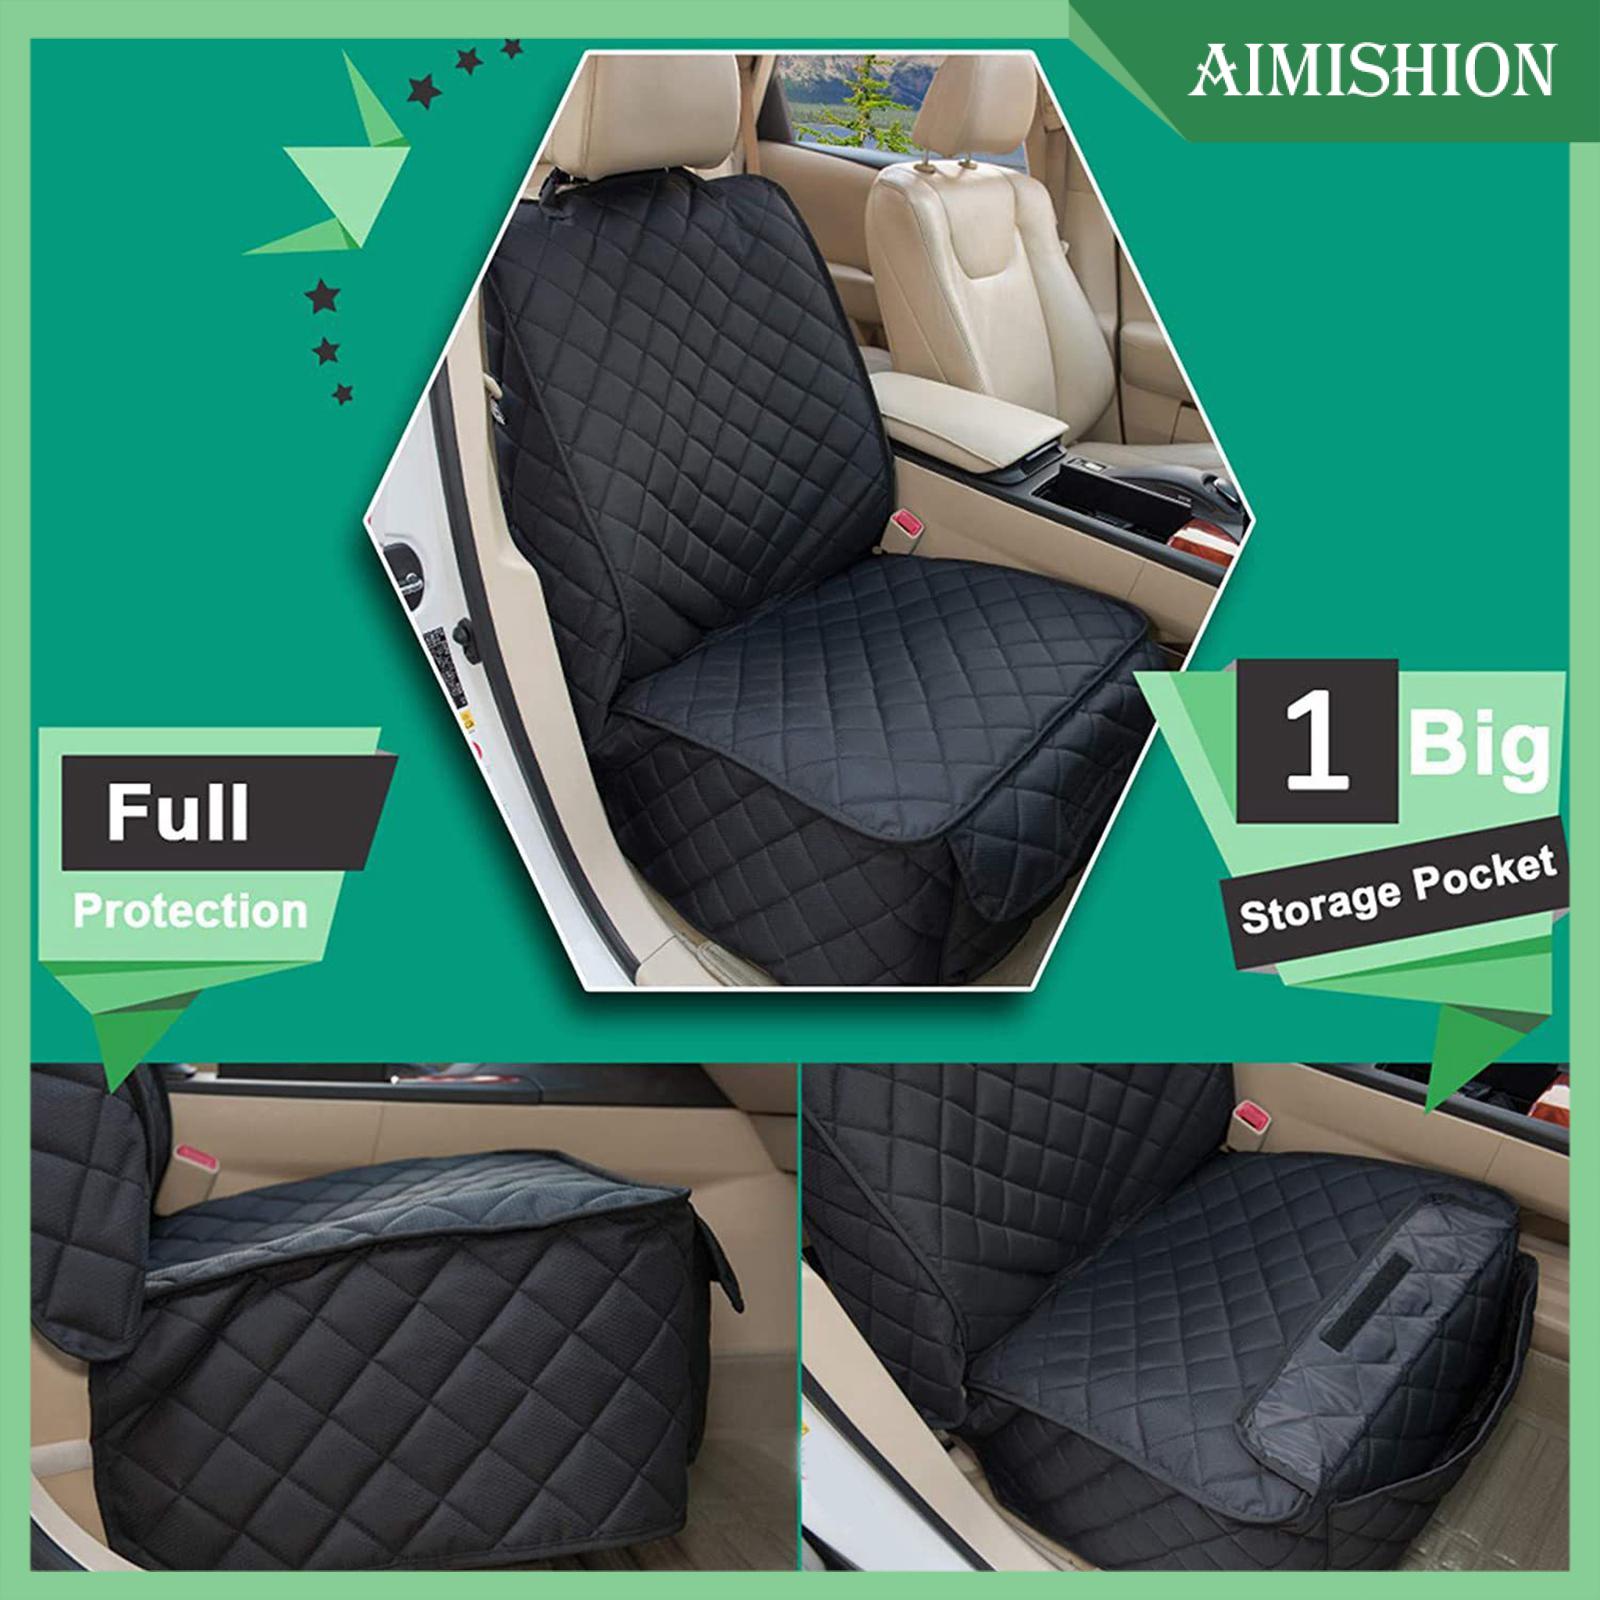 Aimishion Dog Car Seat Cover Pet Seat Cover